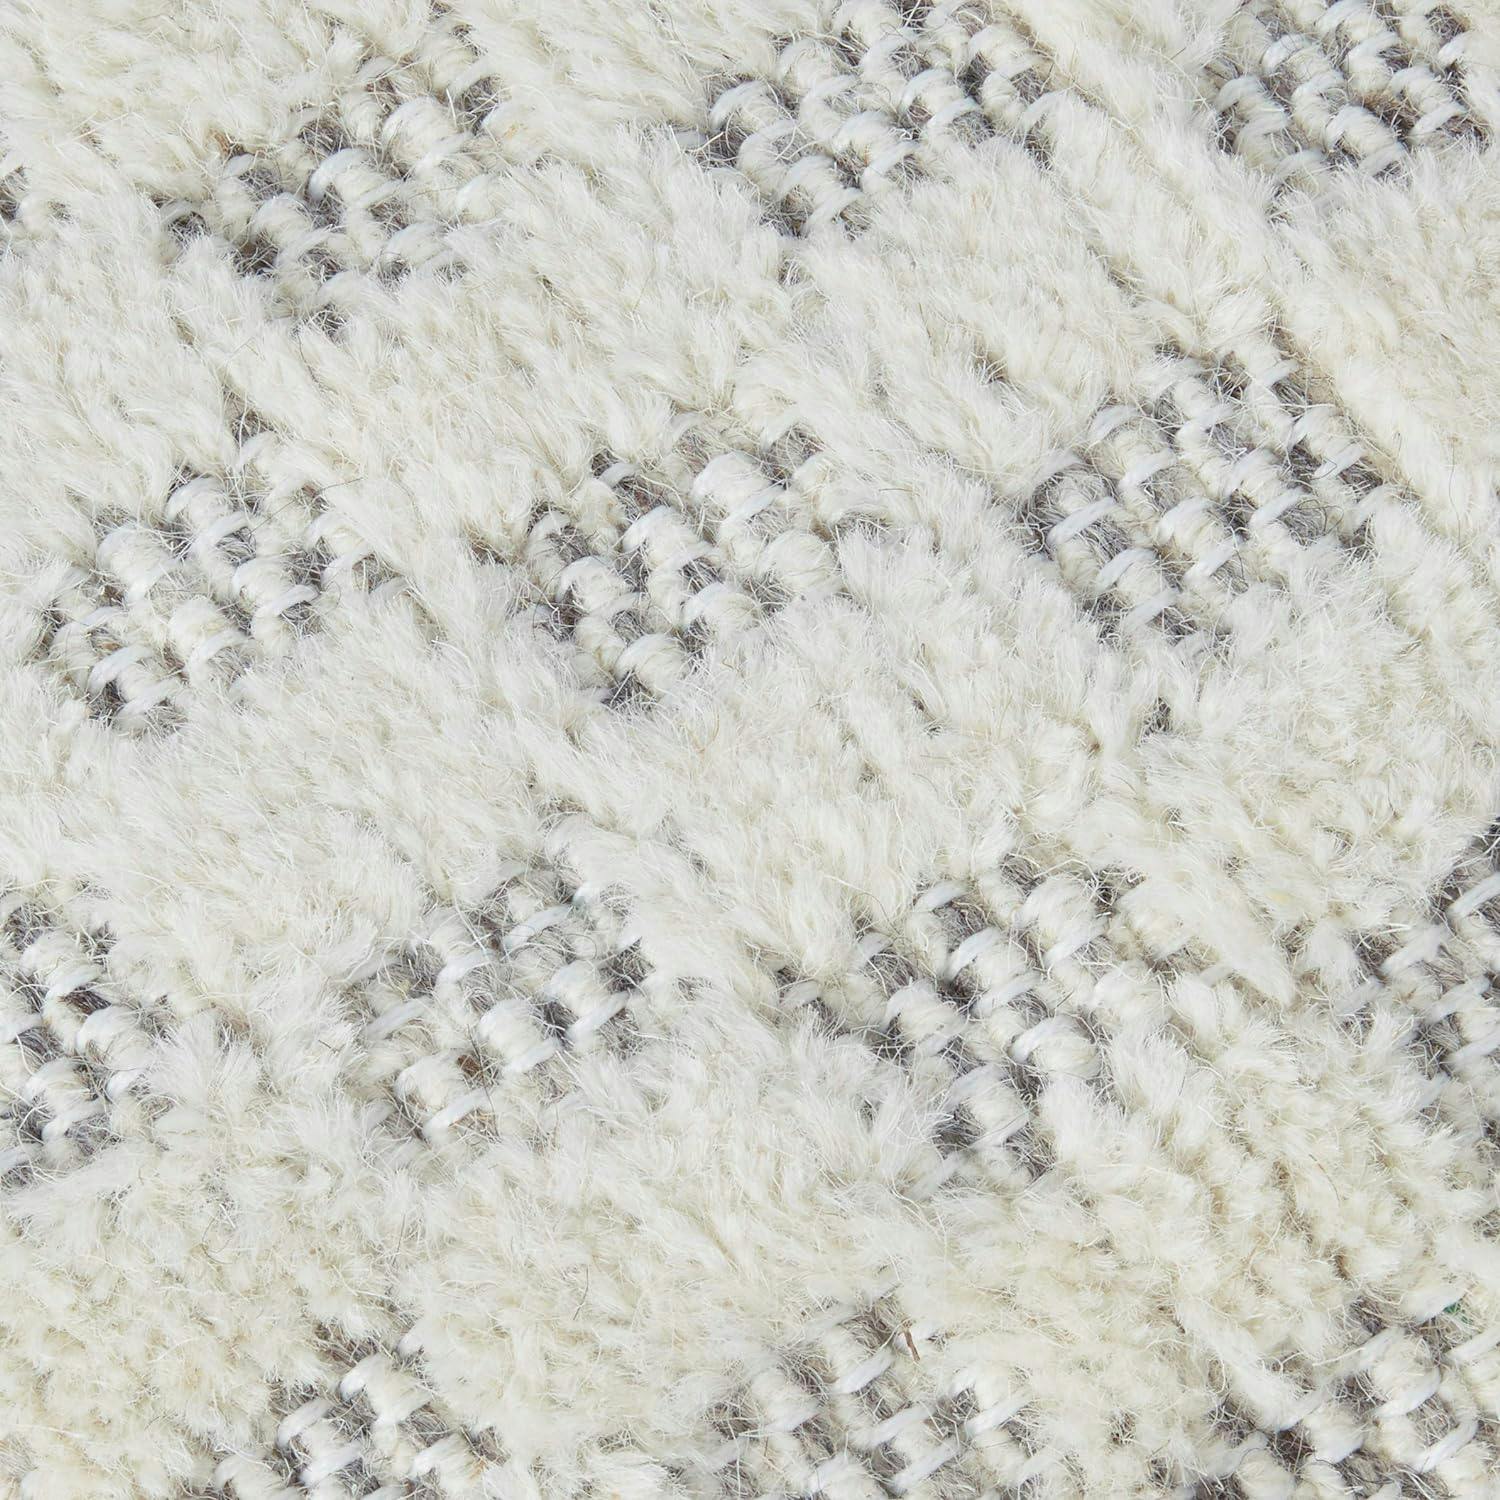 Cream & Light Gray Tufted Geometric Jute Pouf, 18"x18"x14"